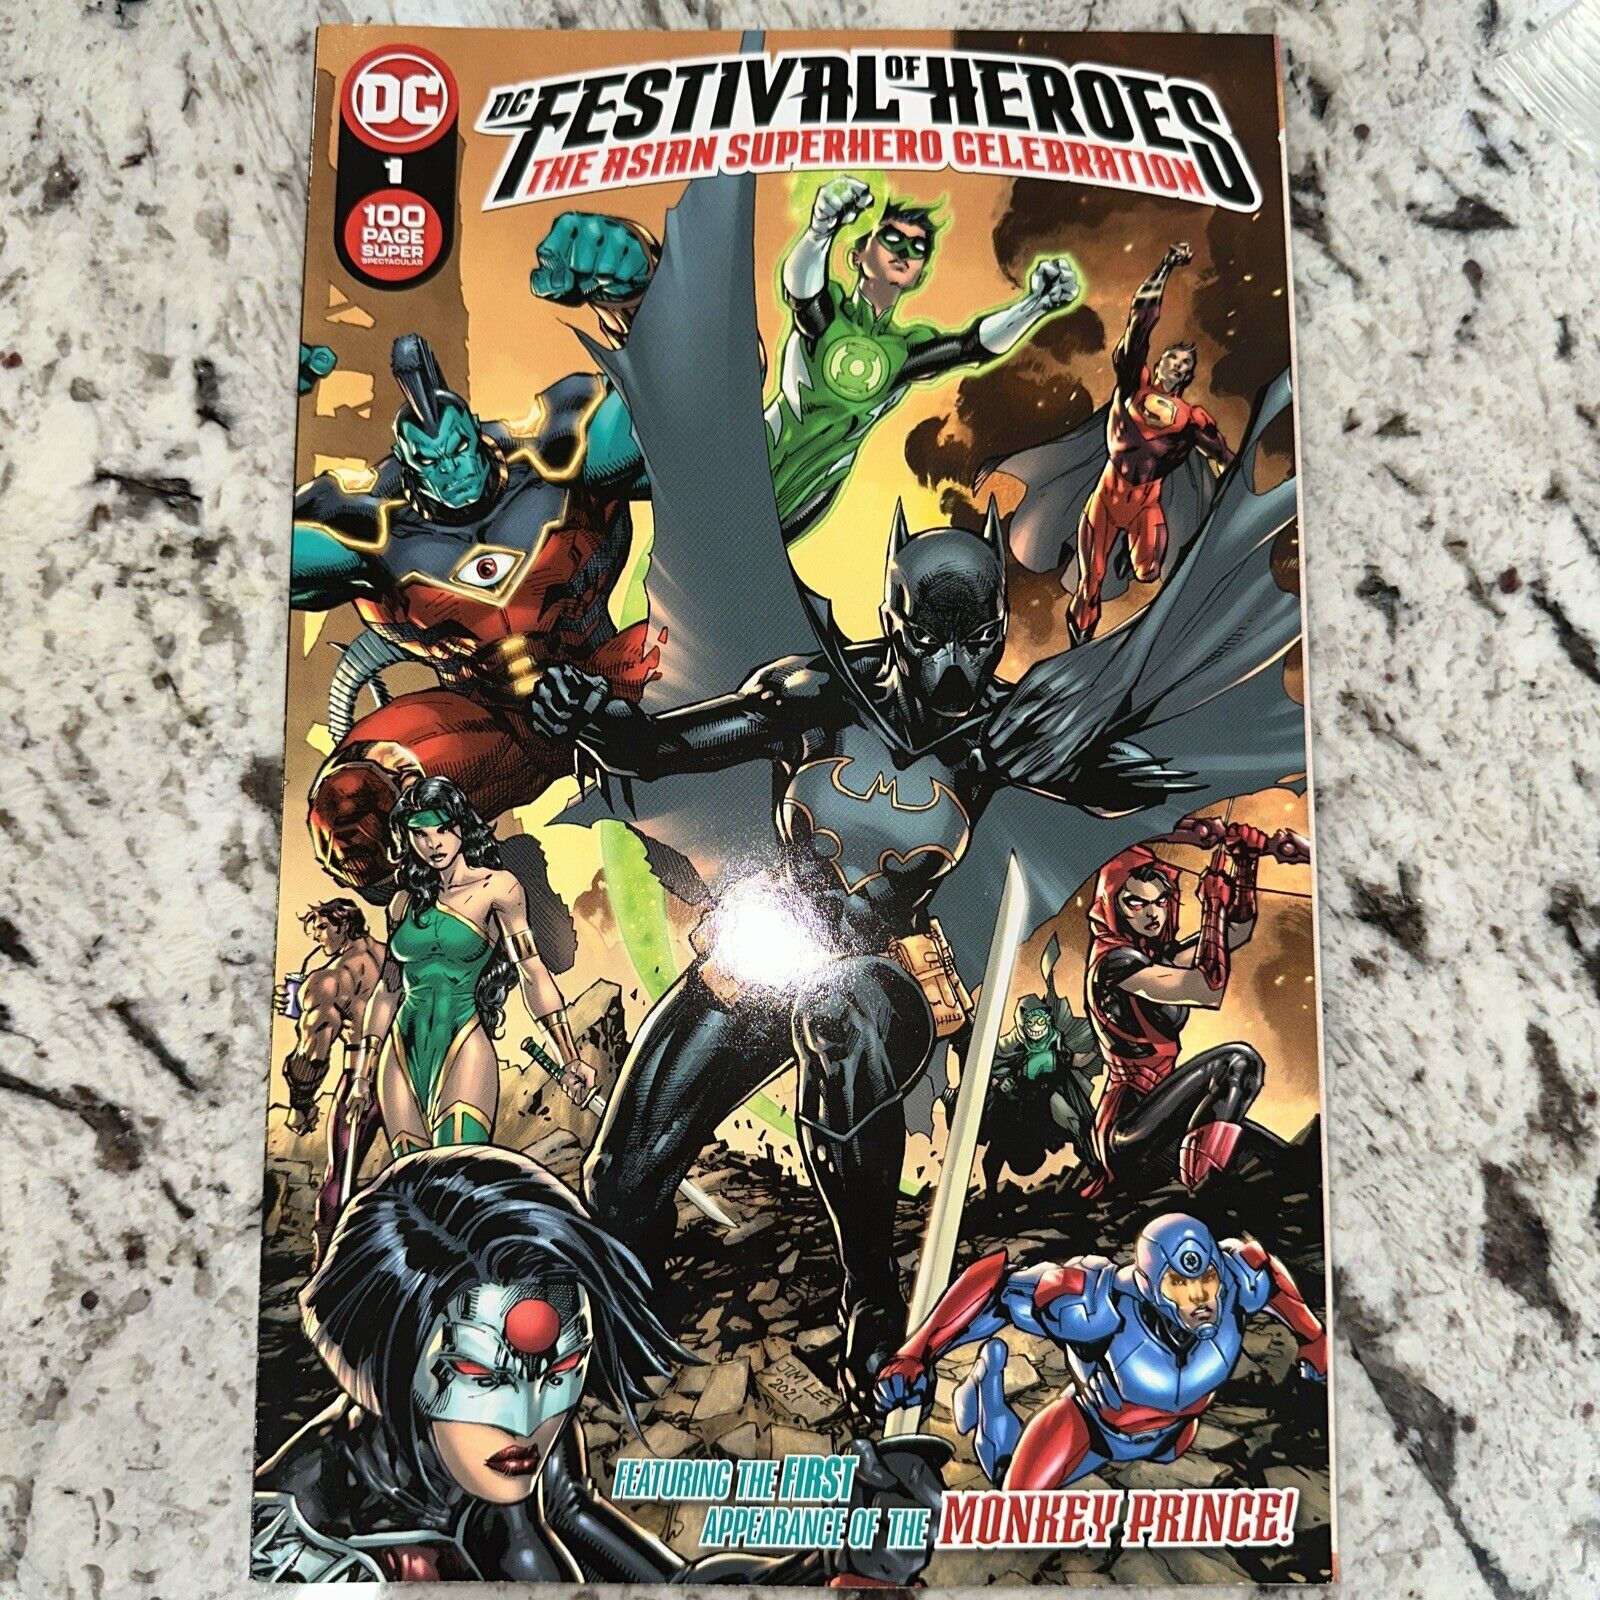 DC FESTIVAL OF HEROES THE ASIAN SUPERHERO CELEBRATION #1 (ONE SHOT) JIM LEE